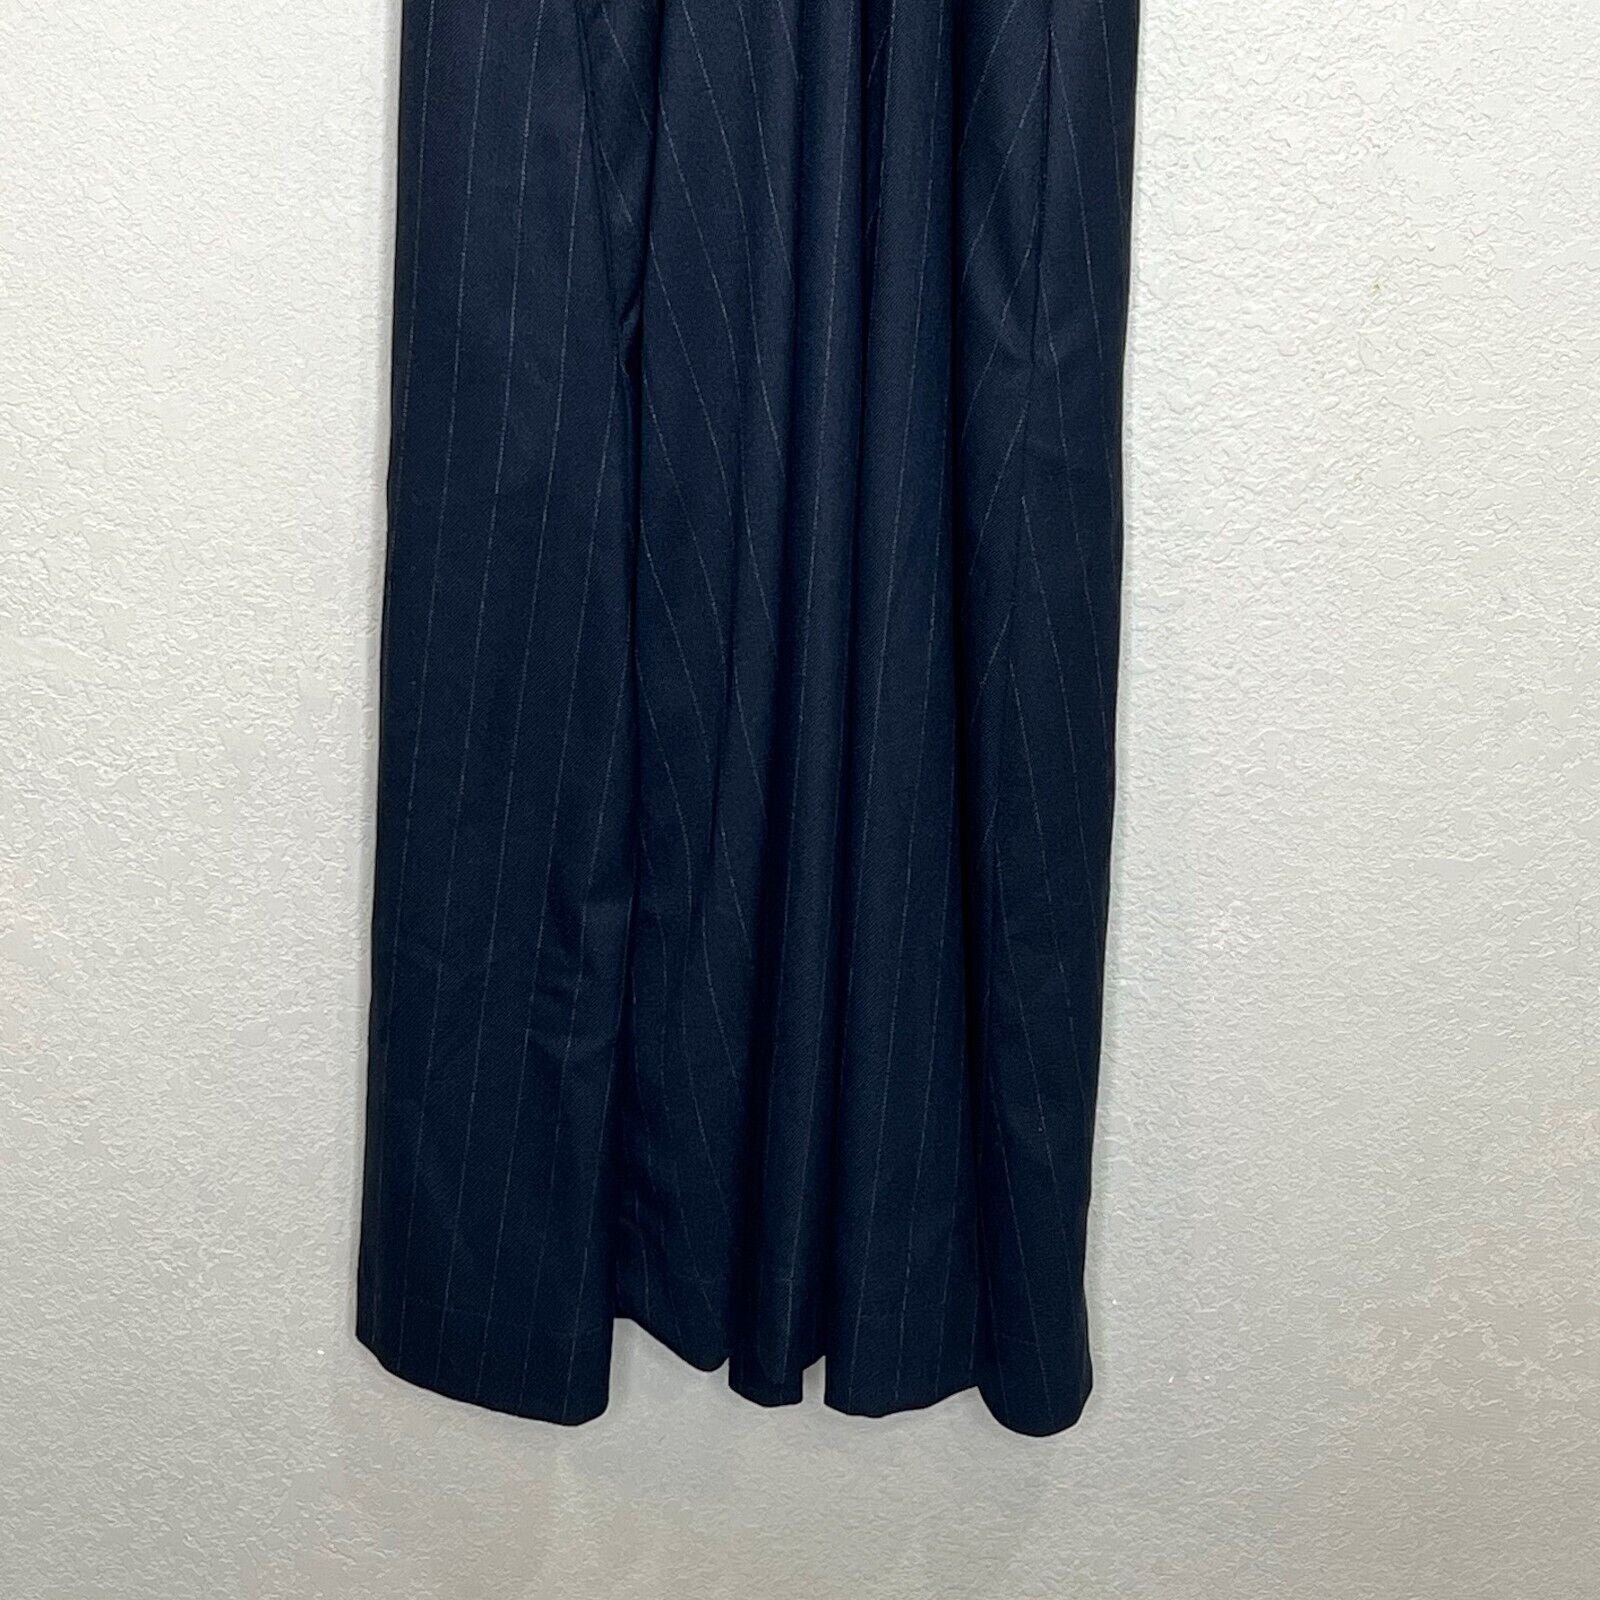 Free People Navy Blue Pinstripe Jumper Apron Maxi Dress Small NEW $168